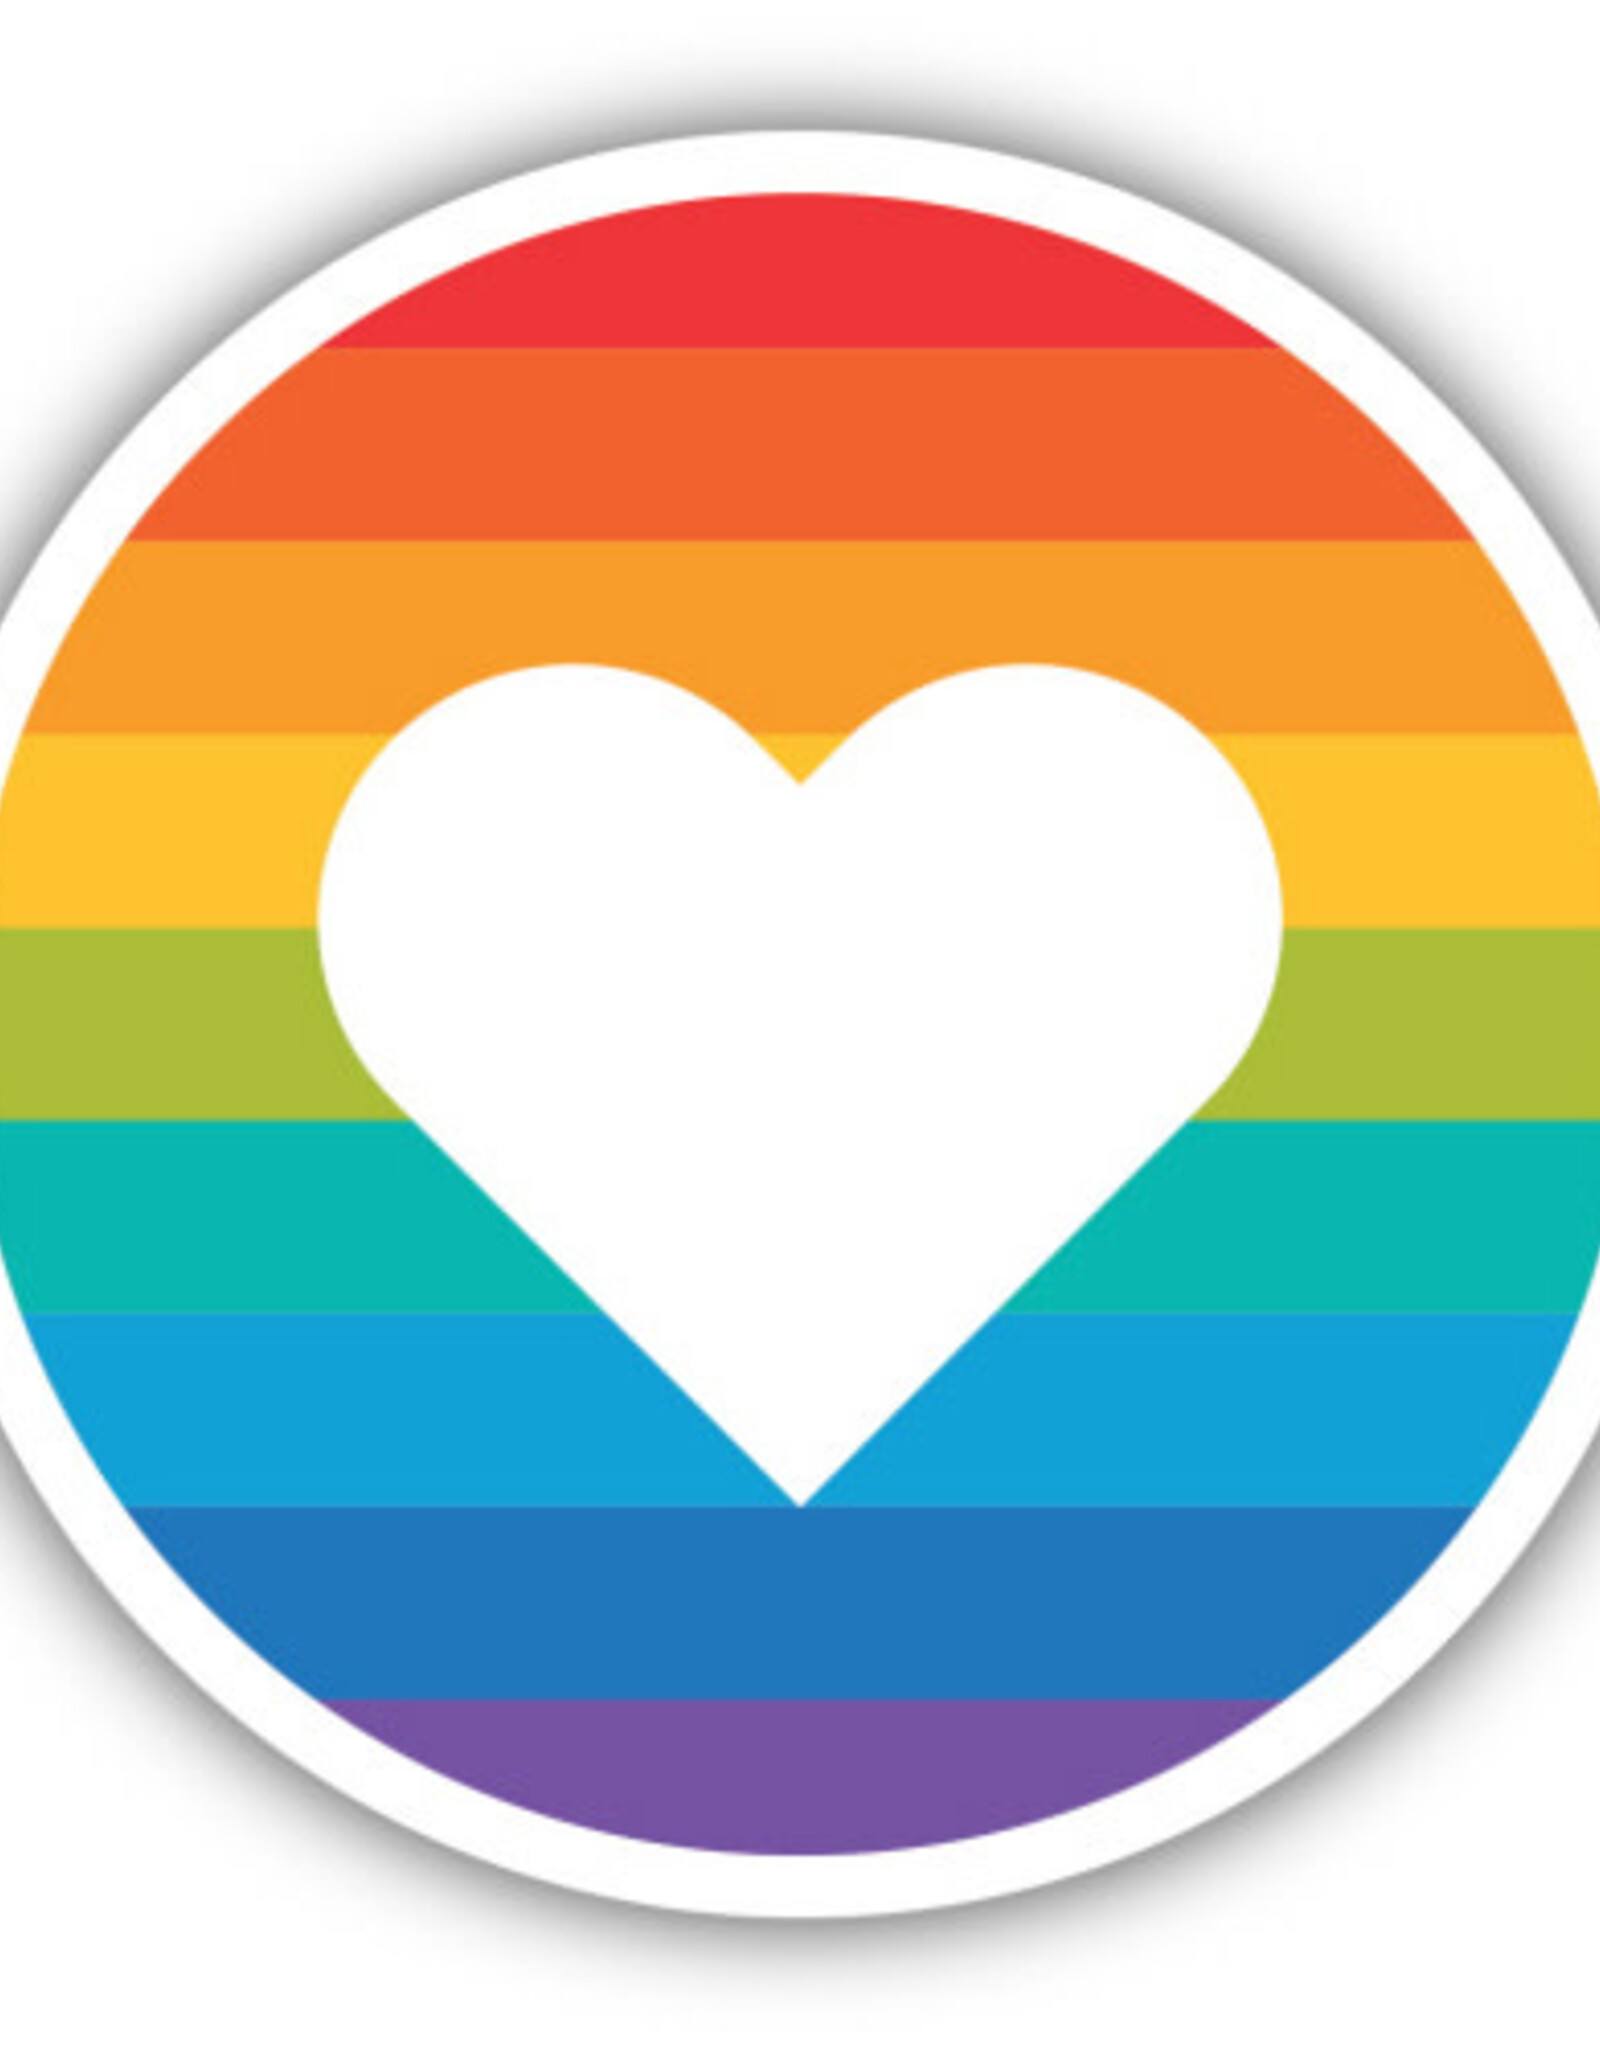 Northwest Stickers NW Stickers Rainbow Heart